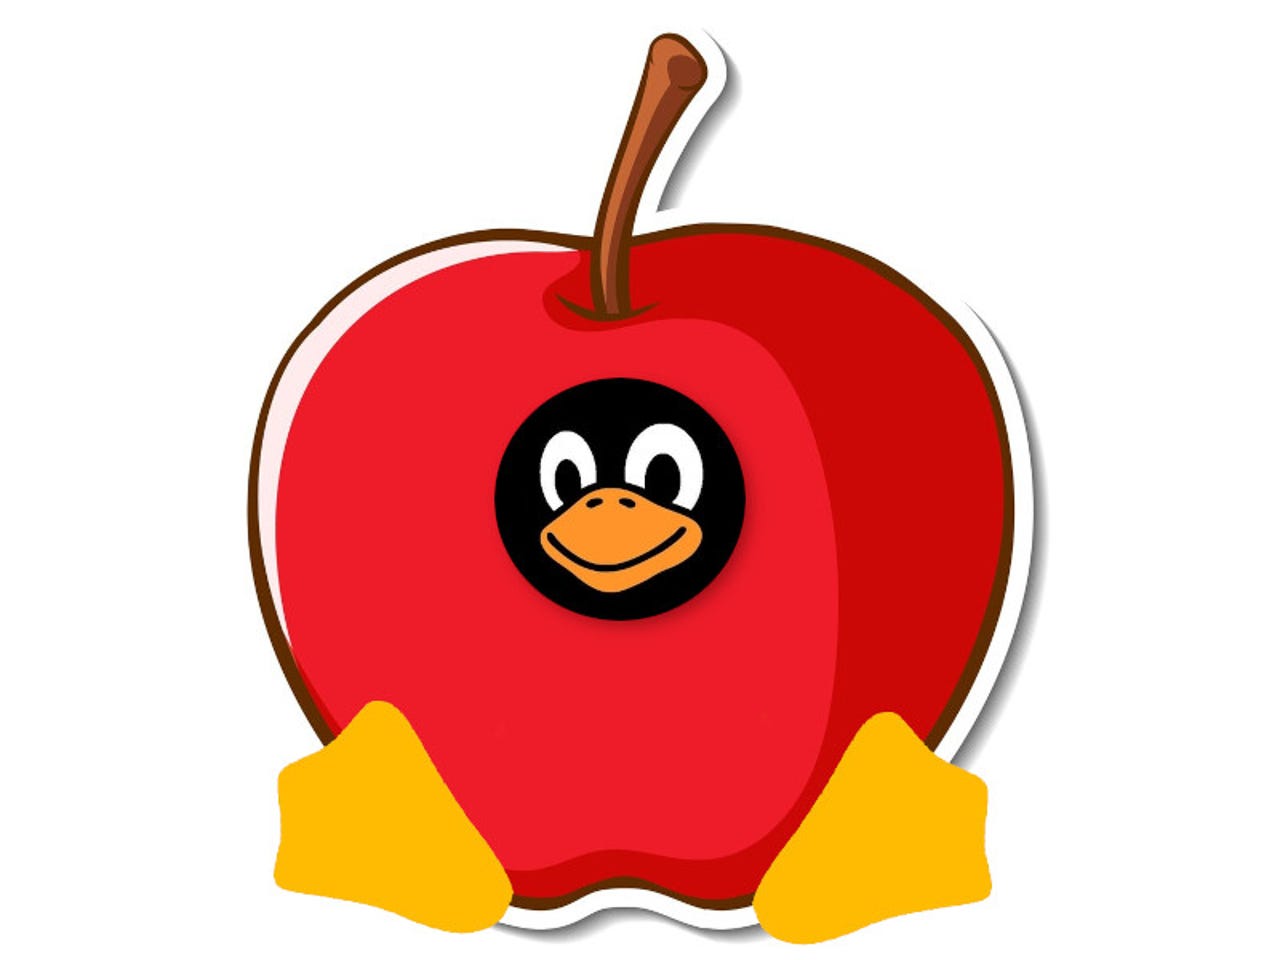 Penguin in apple costume.